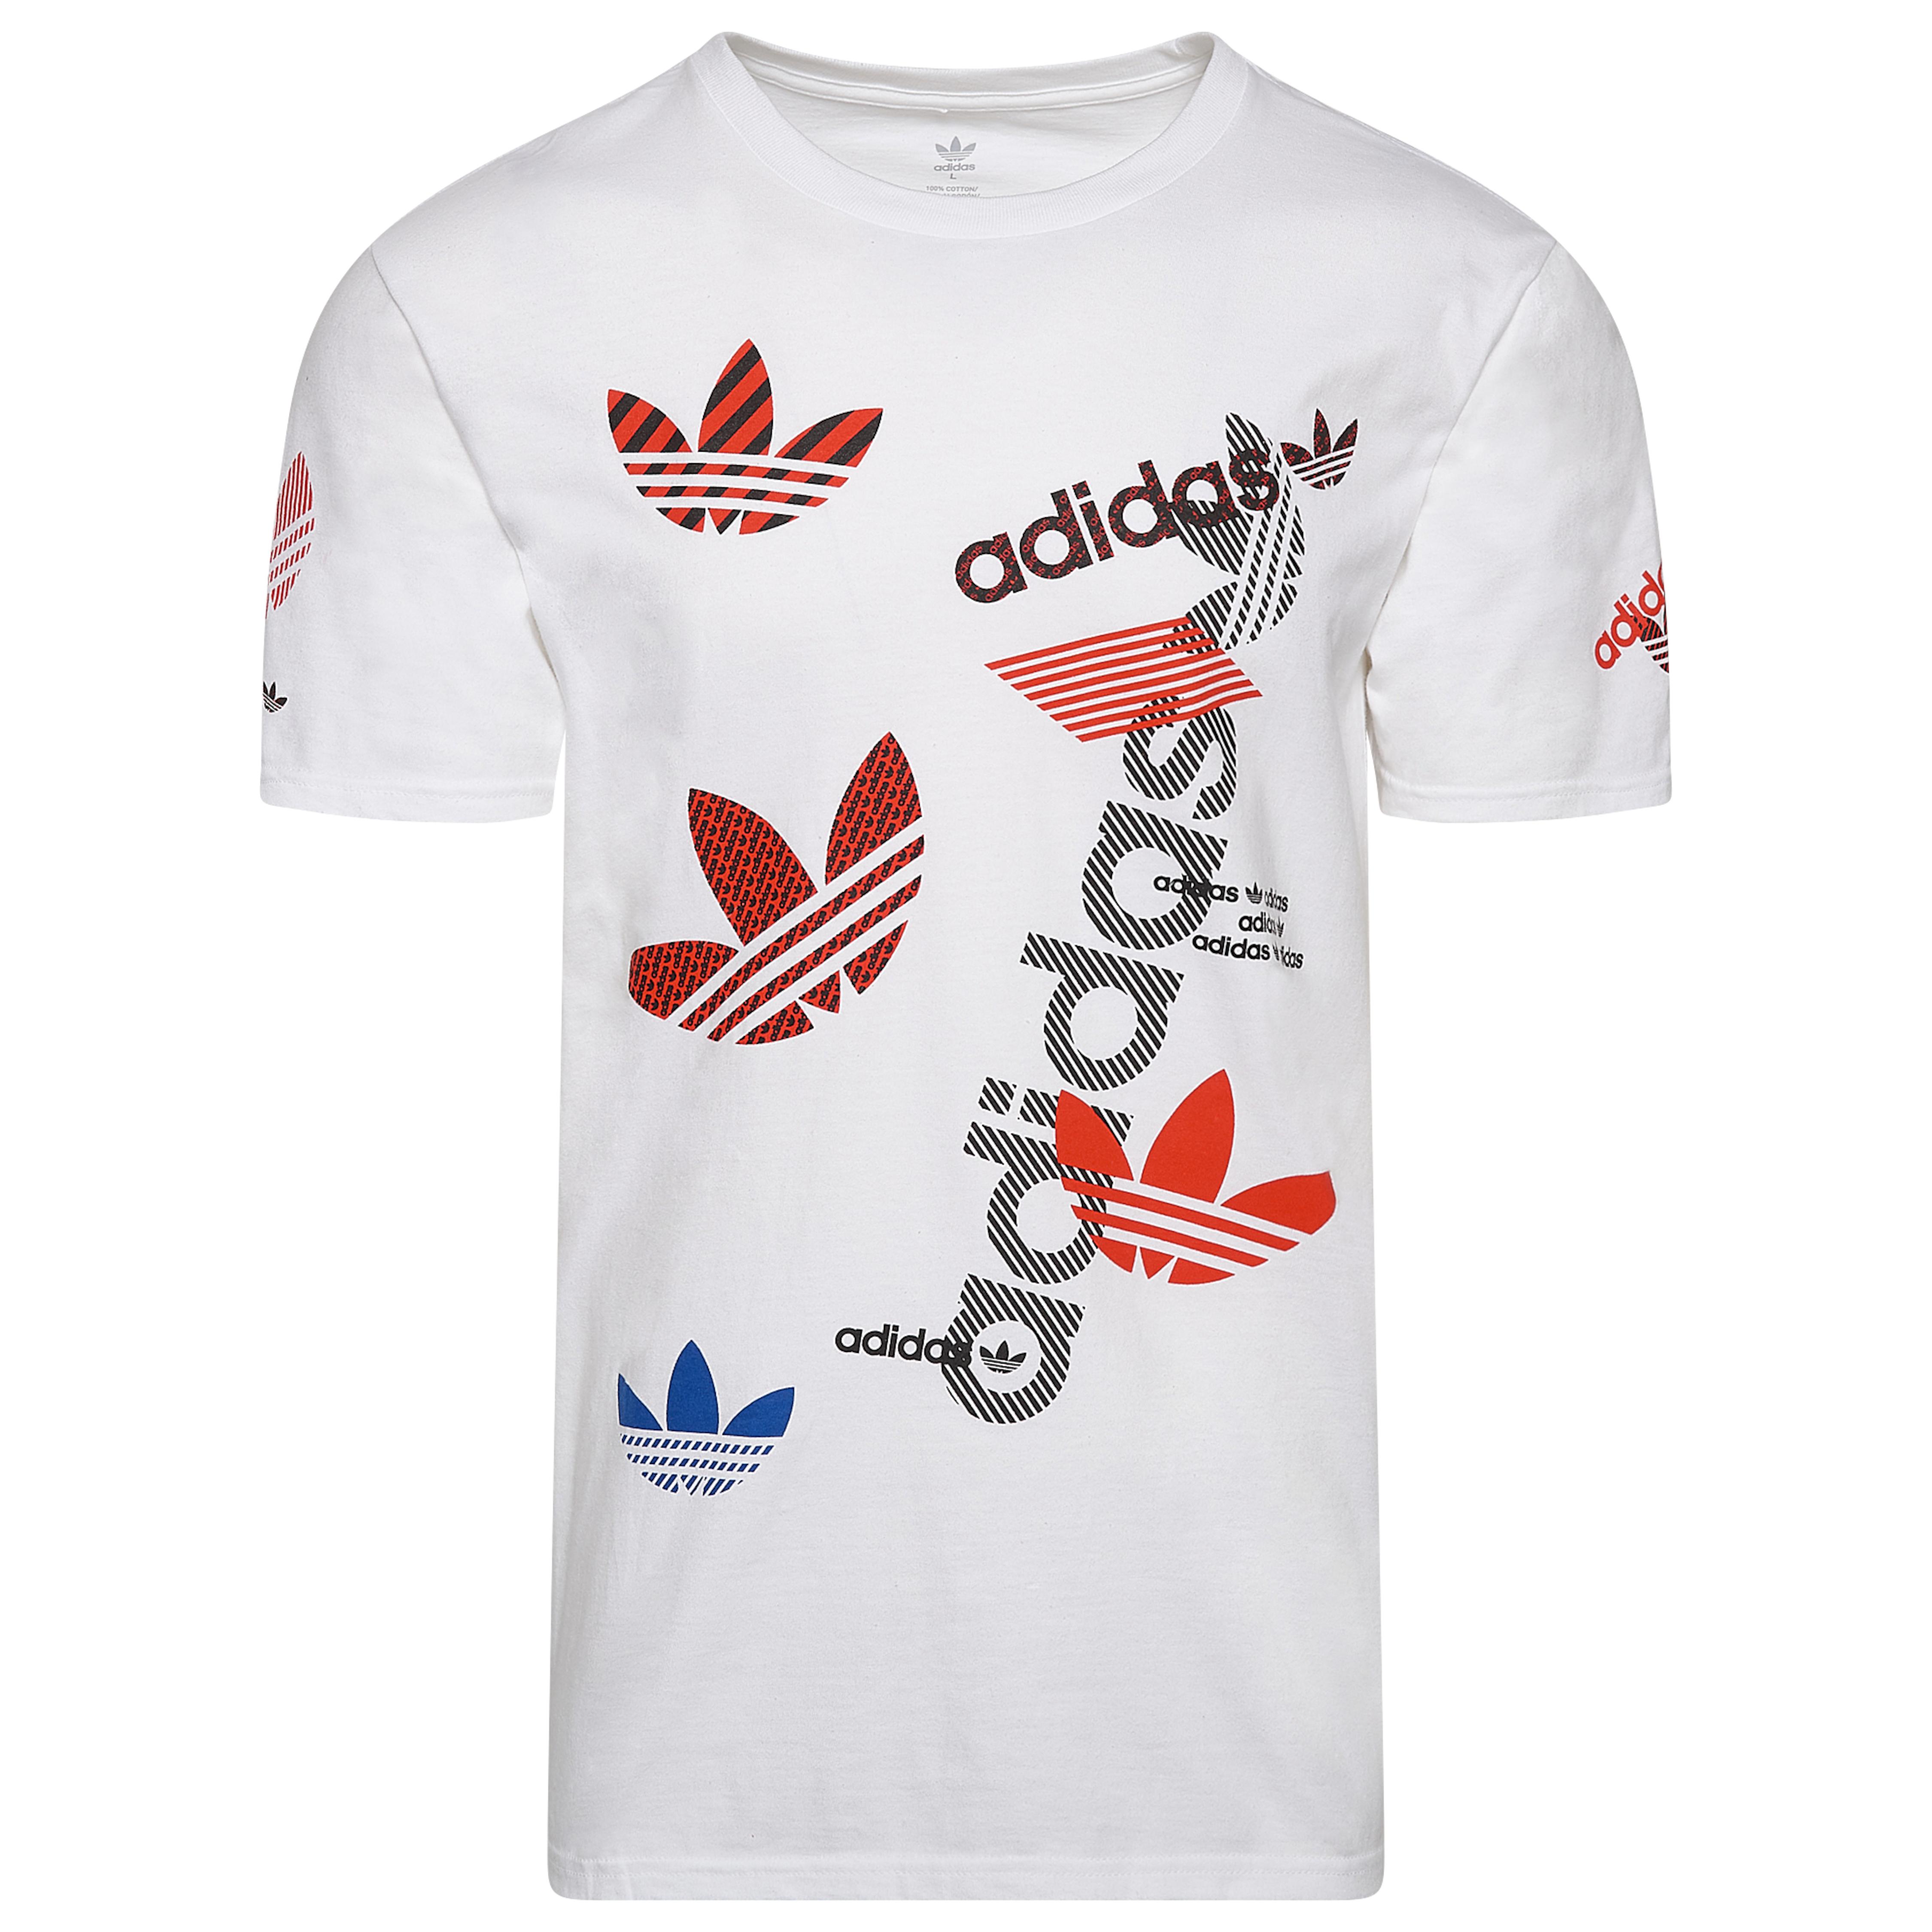 adidas Originals Cotton Logo Distortion T-shirt in White/Red/Black (White)  for Men - Lyst